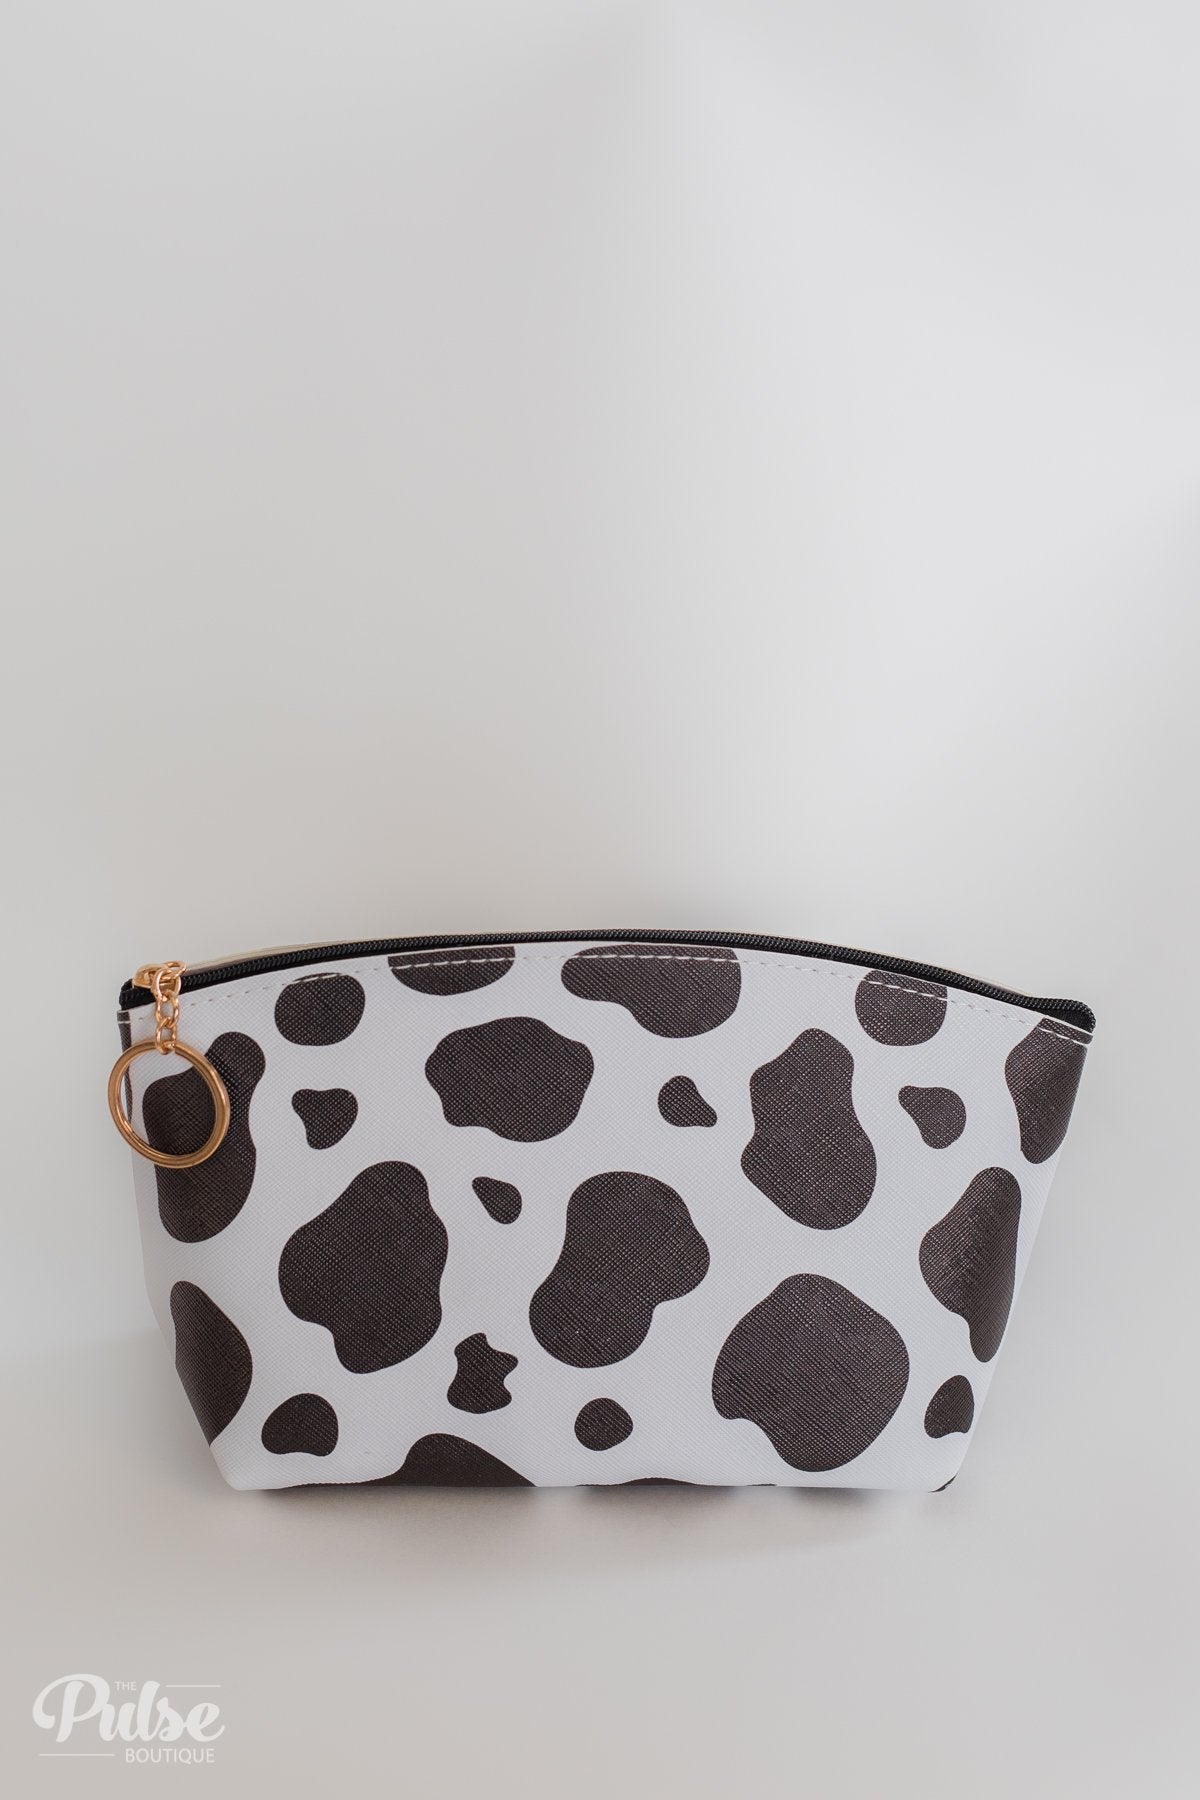 Pulse Perk- Cow Print Cosmetic Bag- Black & White